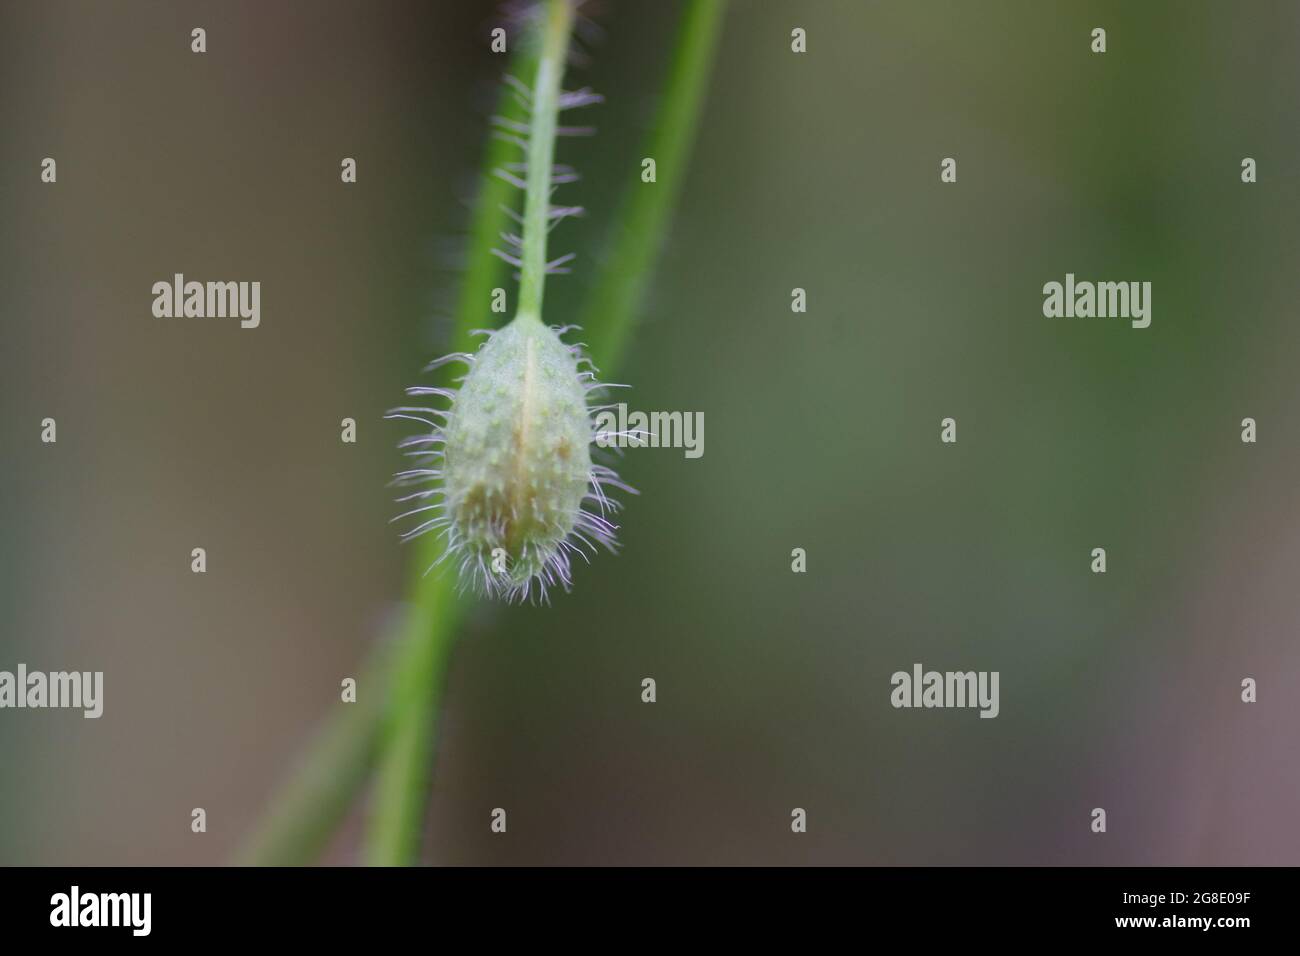 Closeup shot of Papaver apulum (poppy) on a blurred background Stock Photo